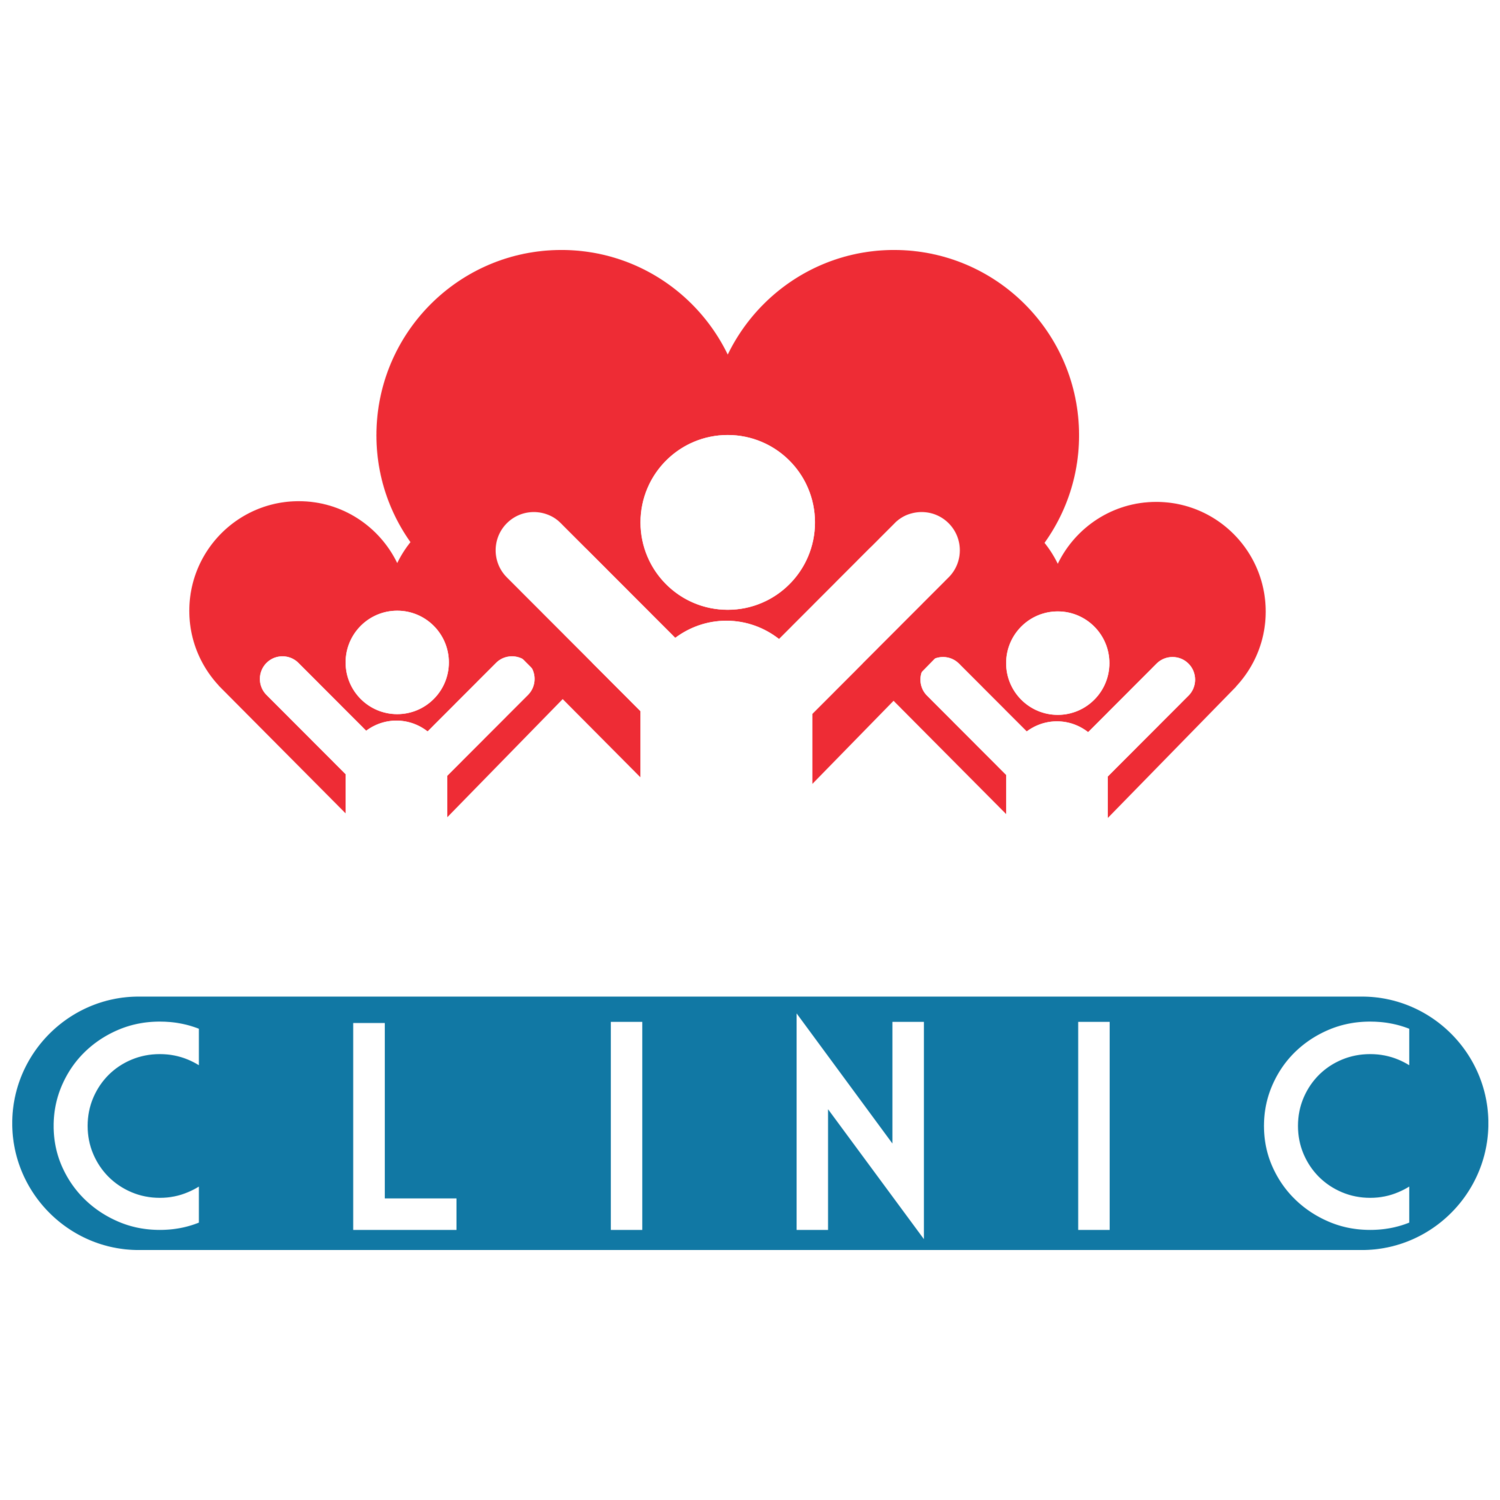 Babies & Children's Clinic